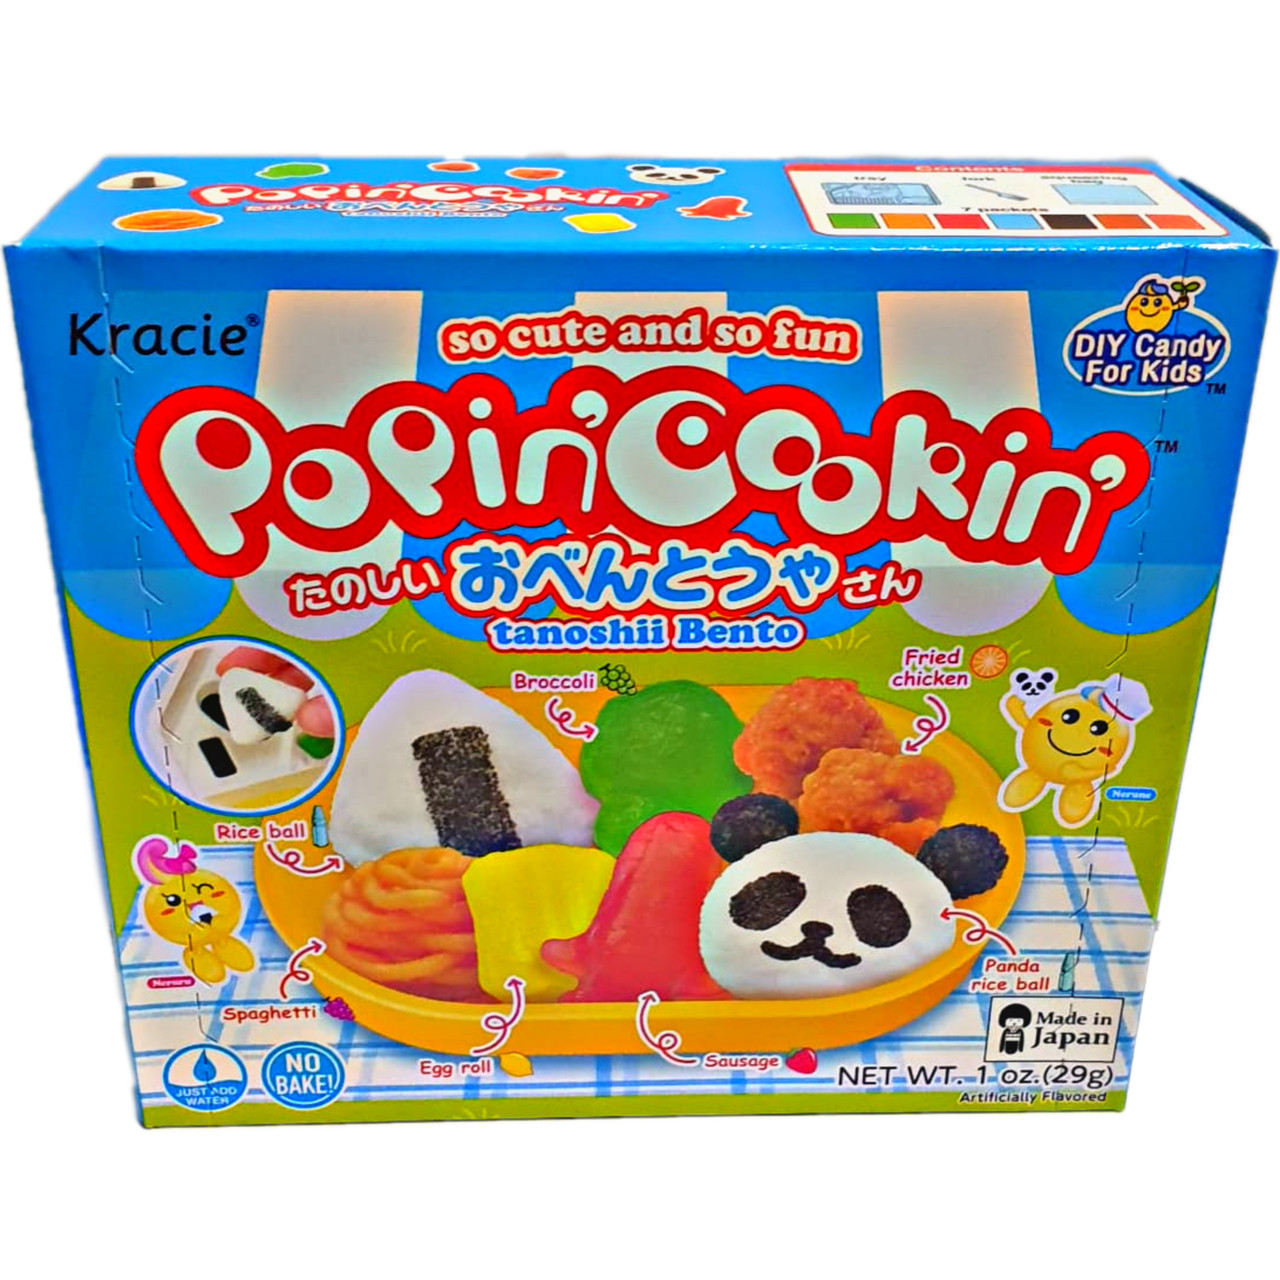 Kracie Popin' Cookin' Diy Japanese Candy Kit, Tanoshii Hamburger, 32g